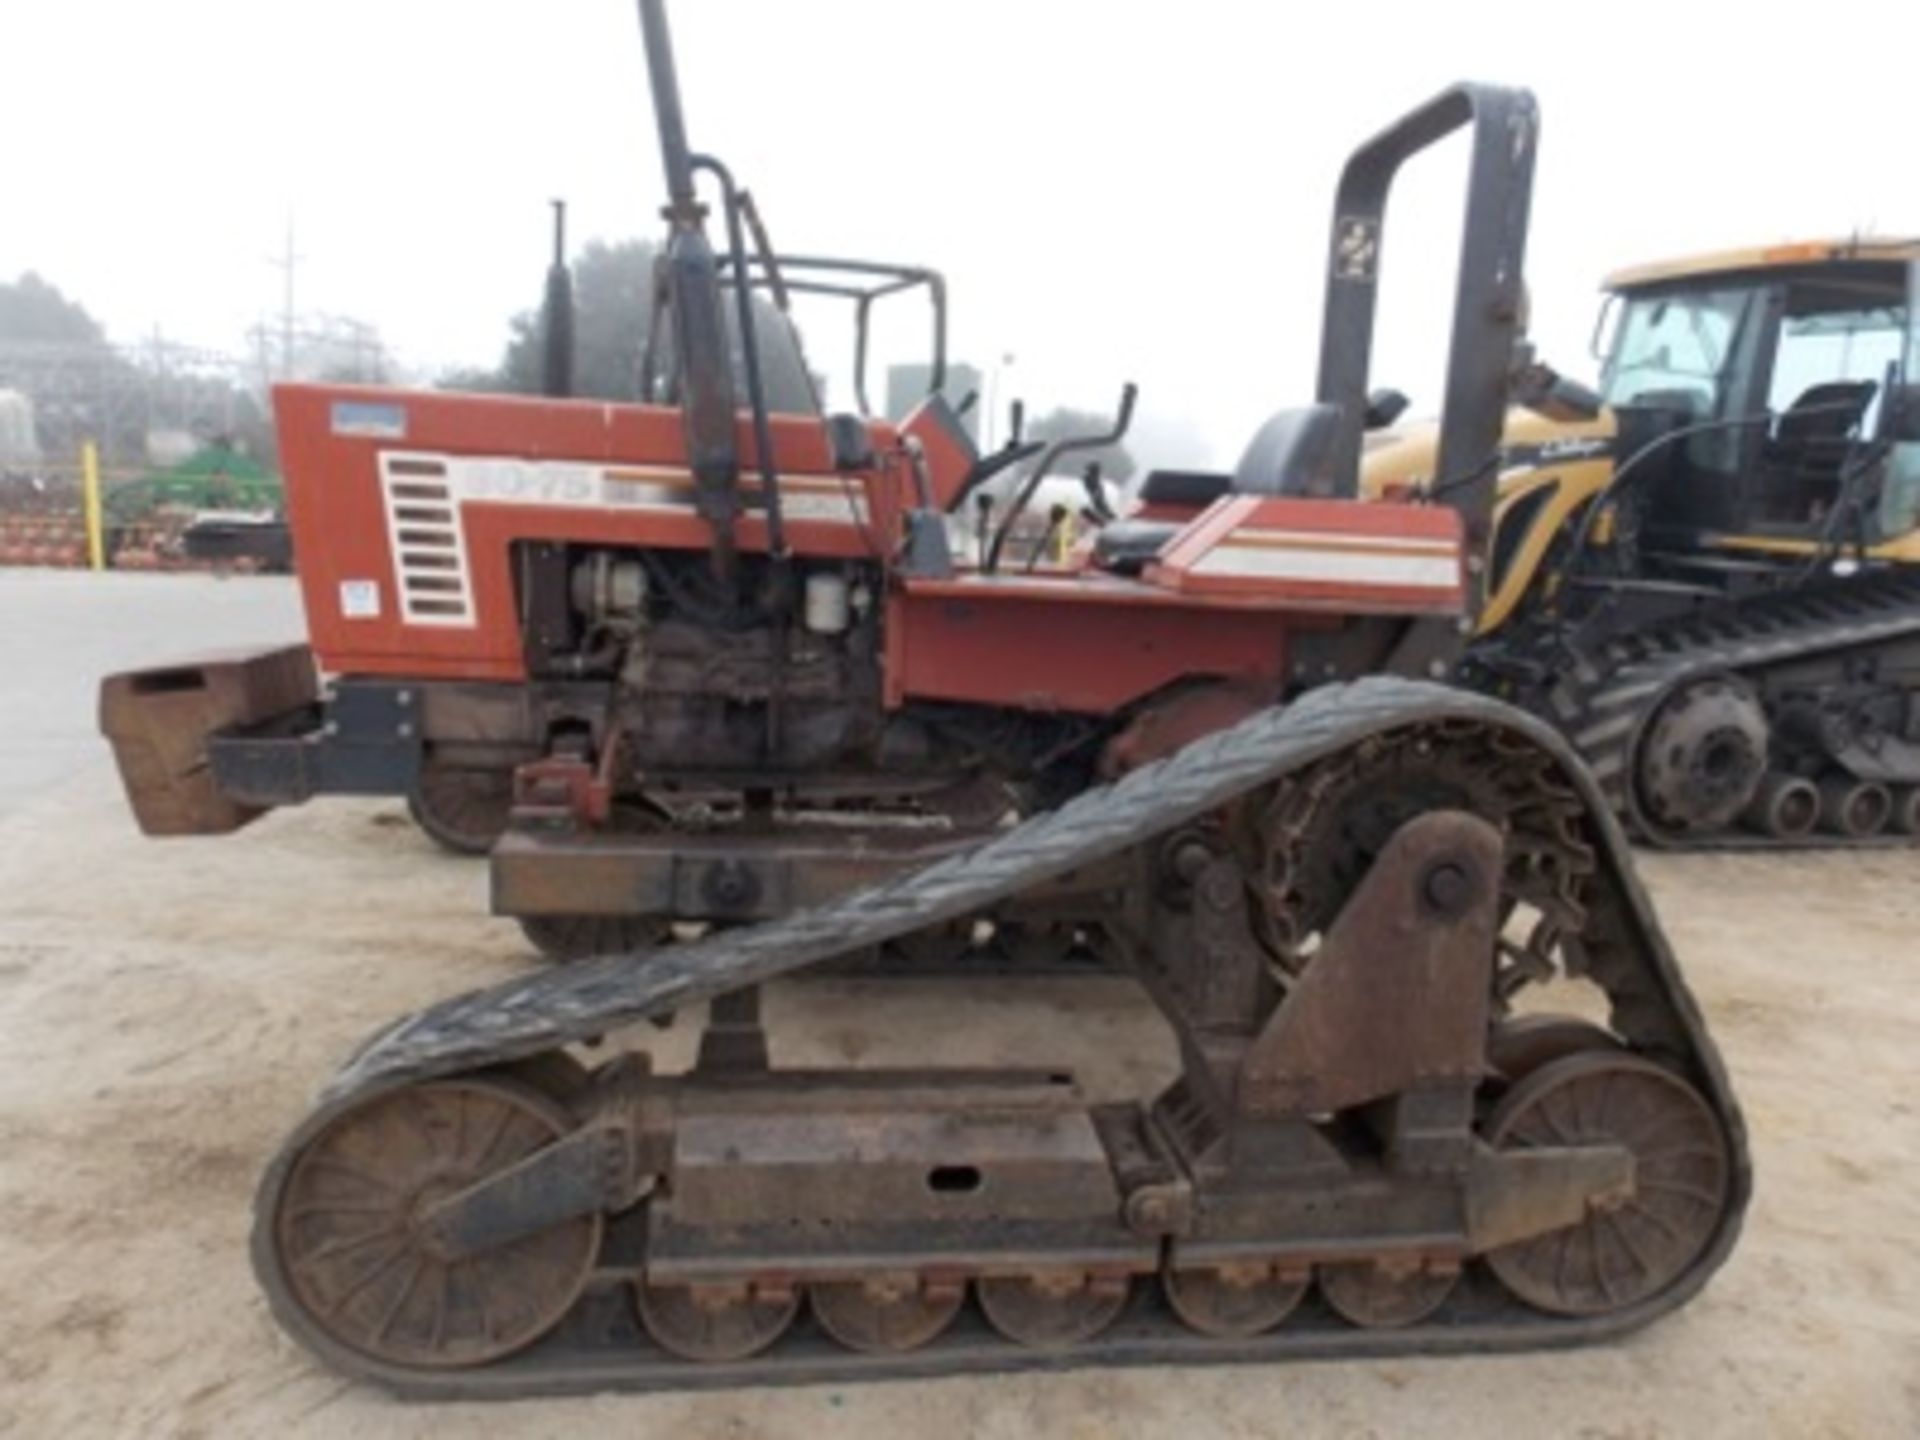 FIAT mod. 80-75/16, 3pt. Hitch, Crawler Mudder Tractor, Hrs: 2081; S/N 473556